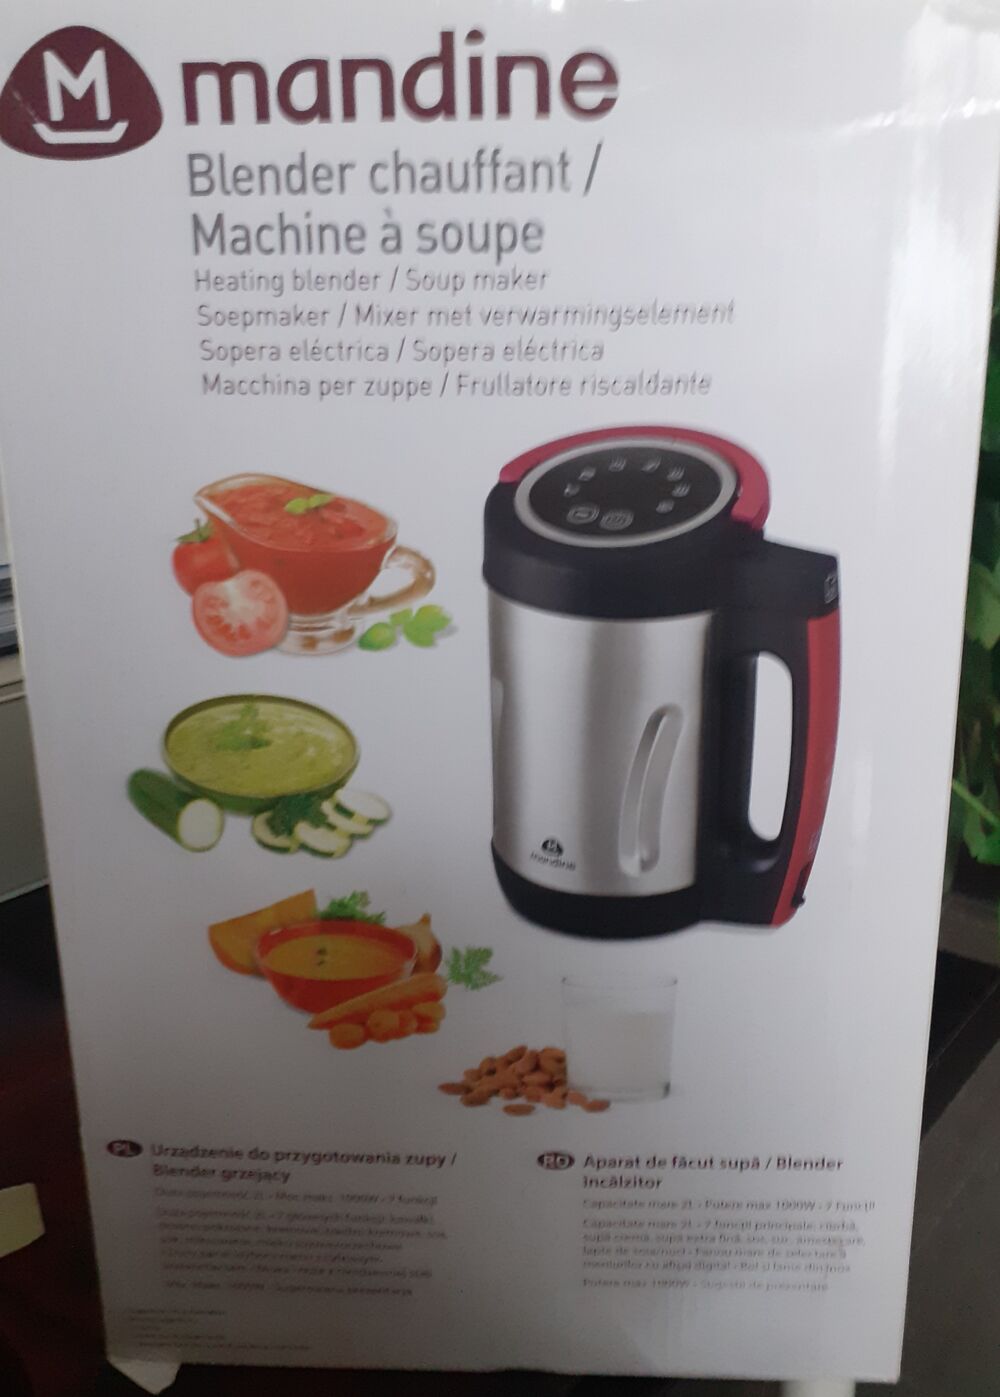 Blender chauffant/ Machine à soupe - Mandine